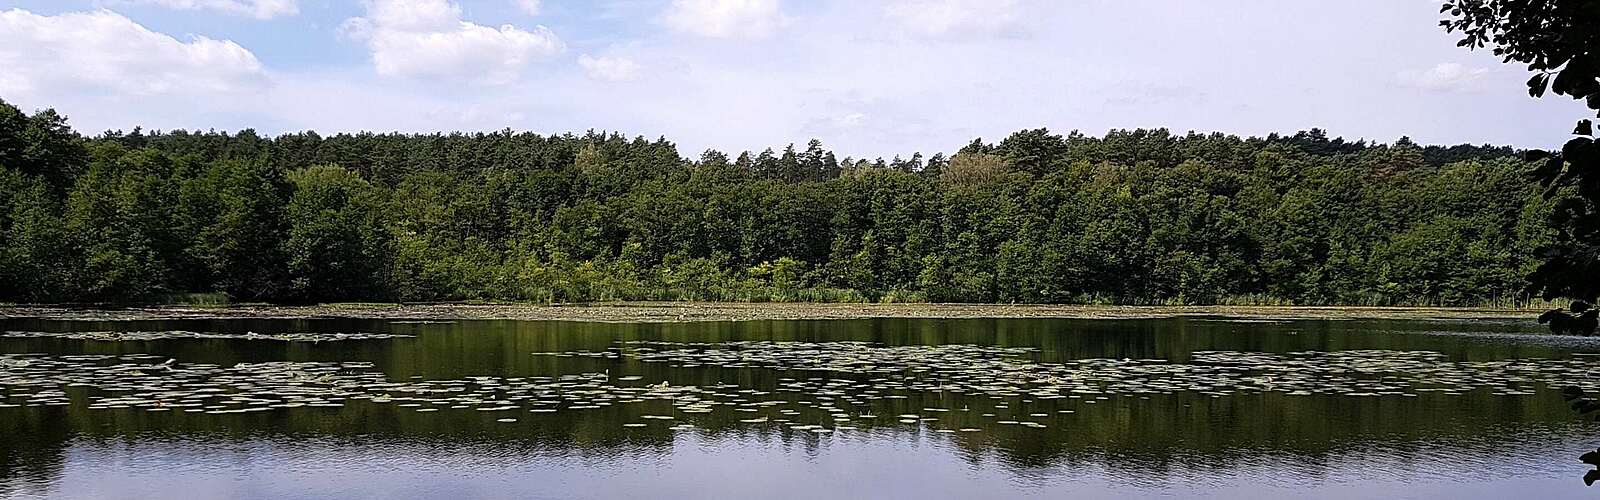 Strehlesee im Naturpark Barnim,
        
    

        Foto: TMB-Fotoarchiv/Frank Meyer